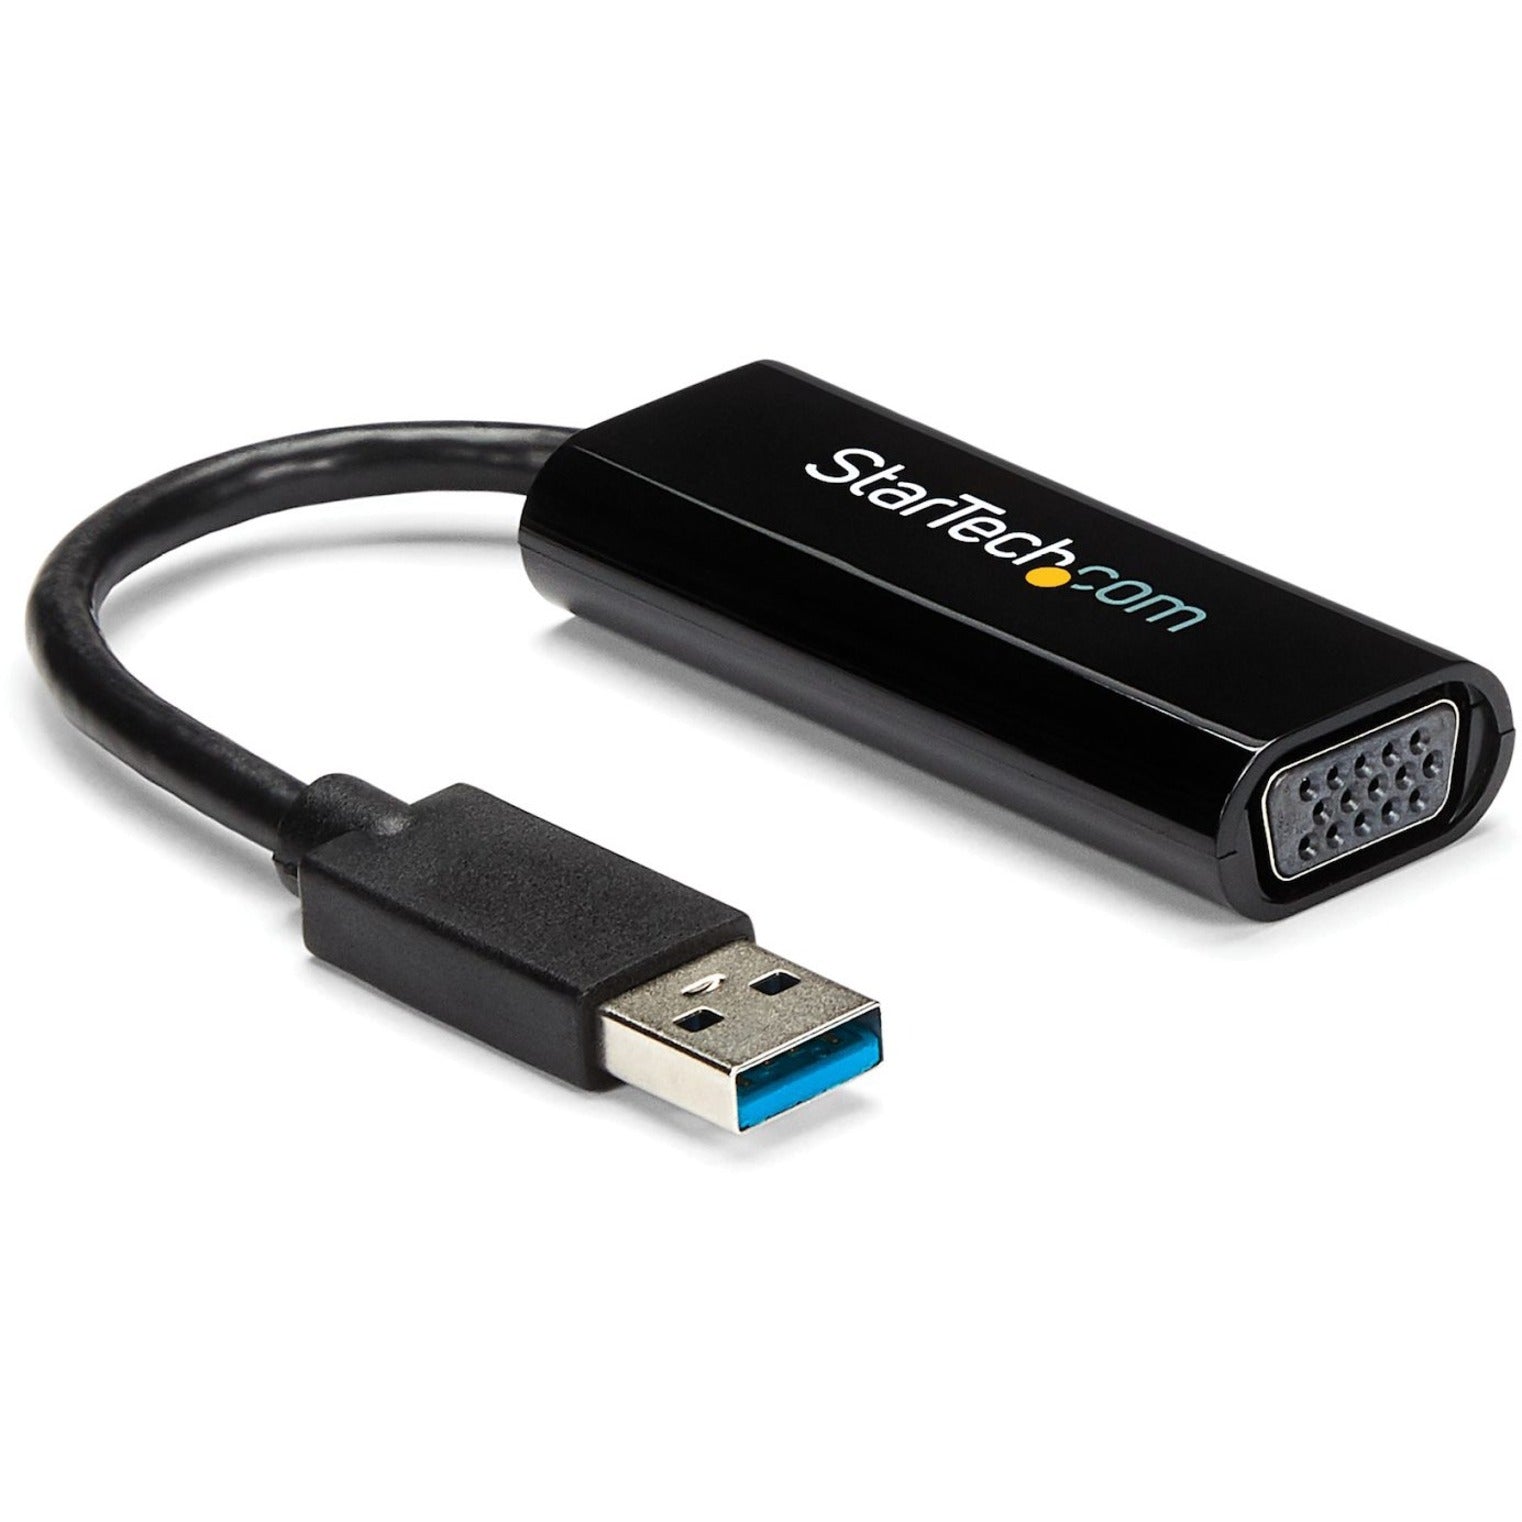 StarTech.com USB32VGAES Slim USB 3.0 Video Adapter, External Multi Monitor Adapter